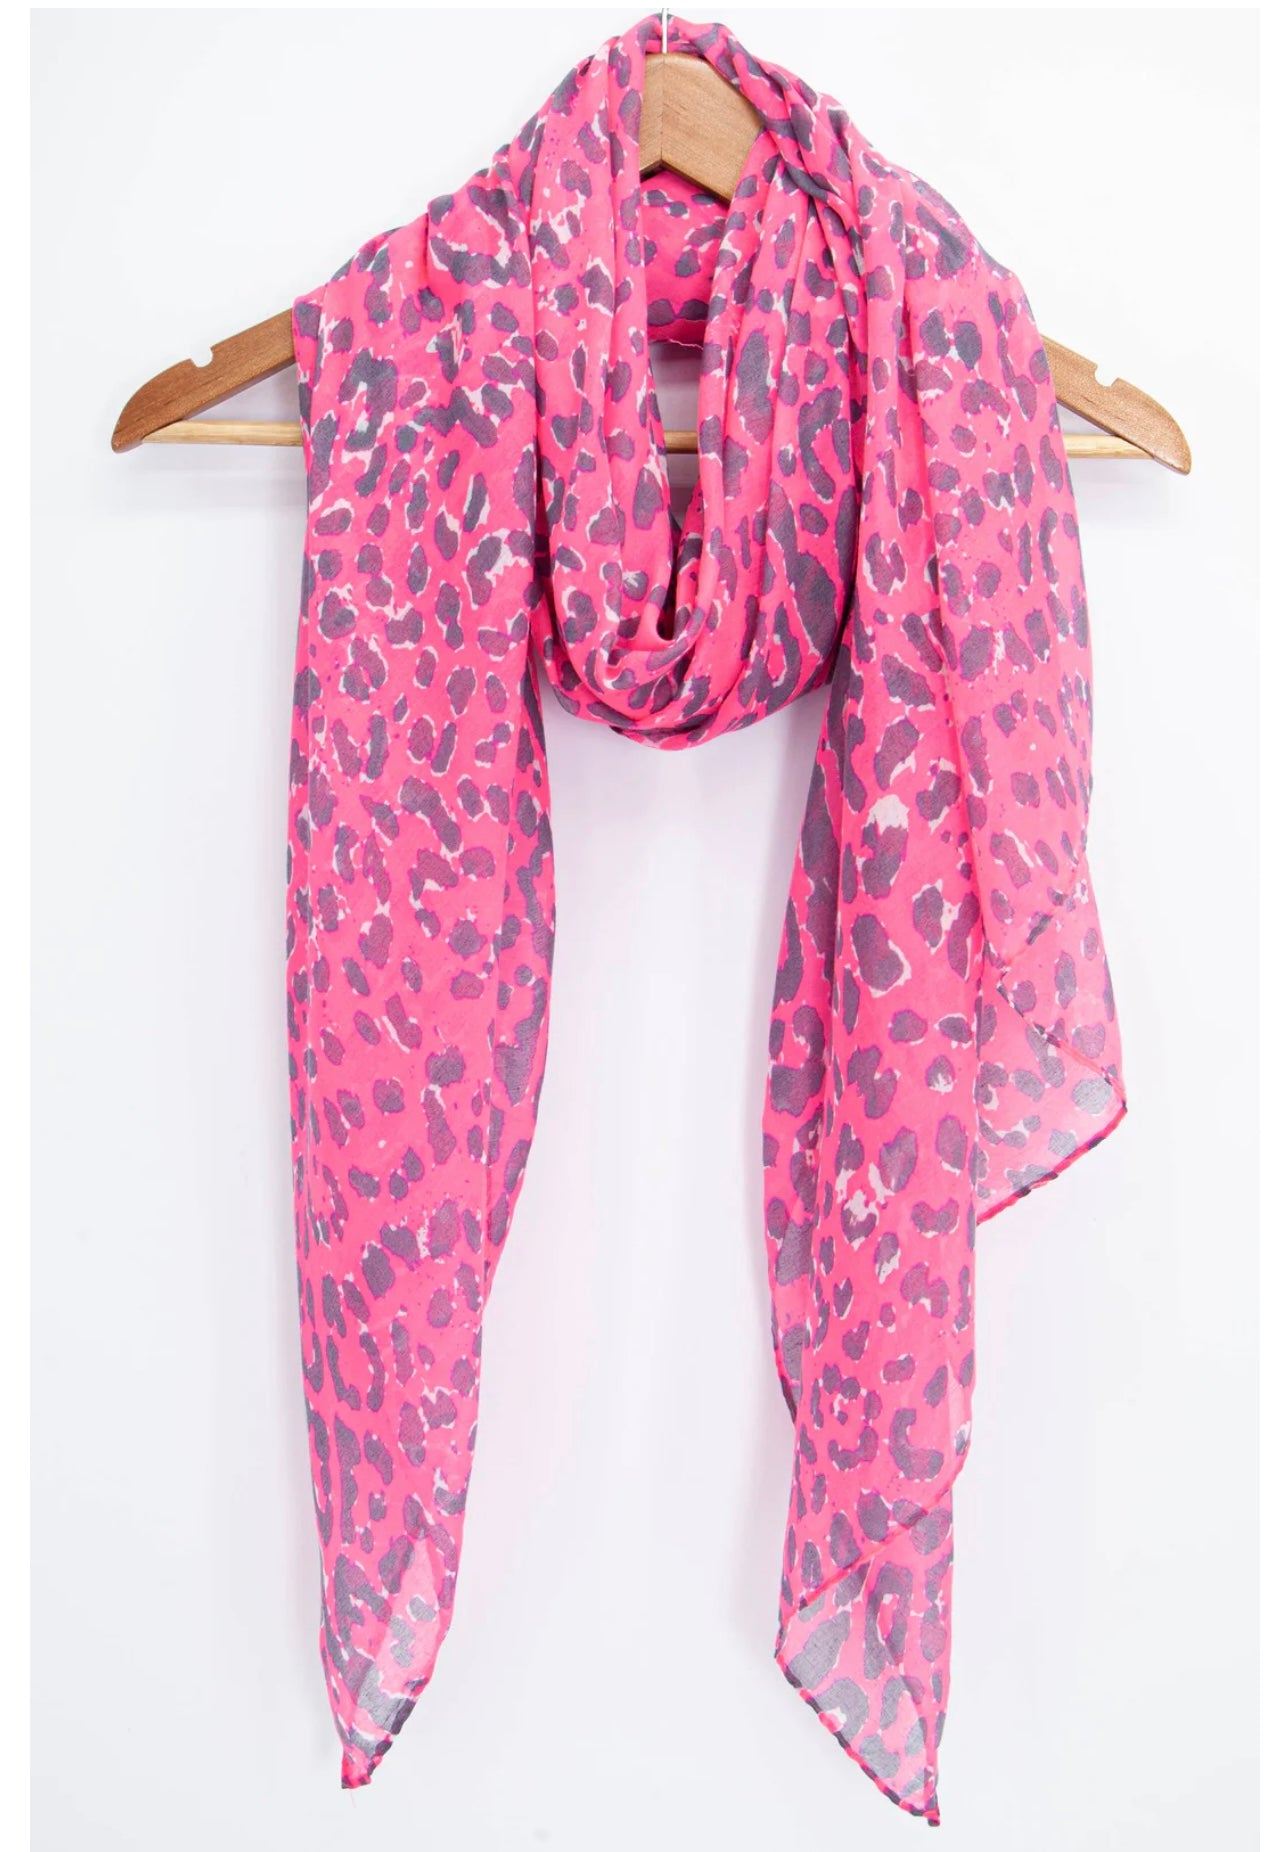 Hot Pink Leopard Print Scarf